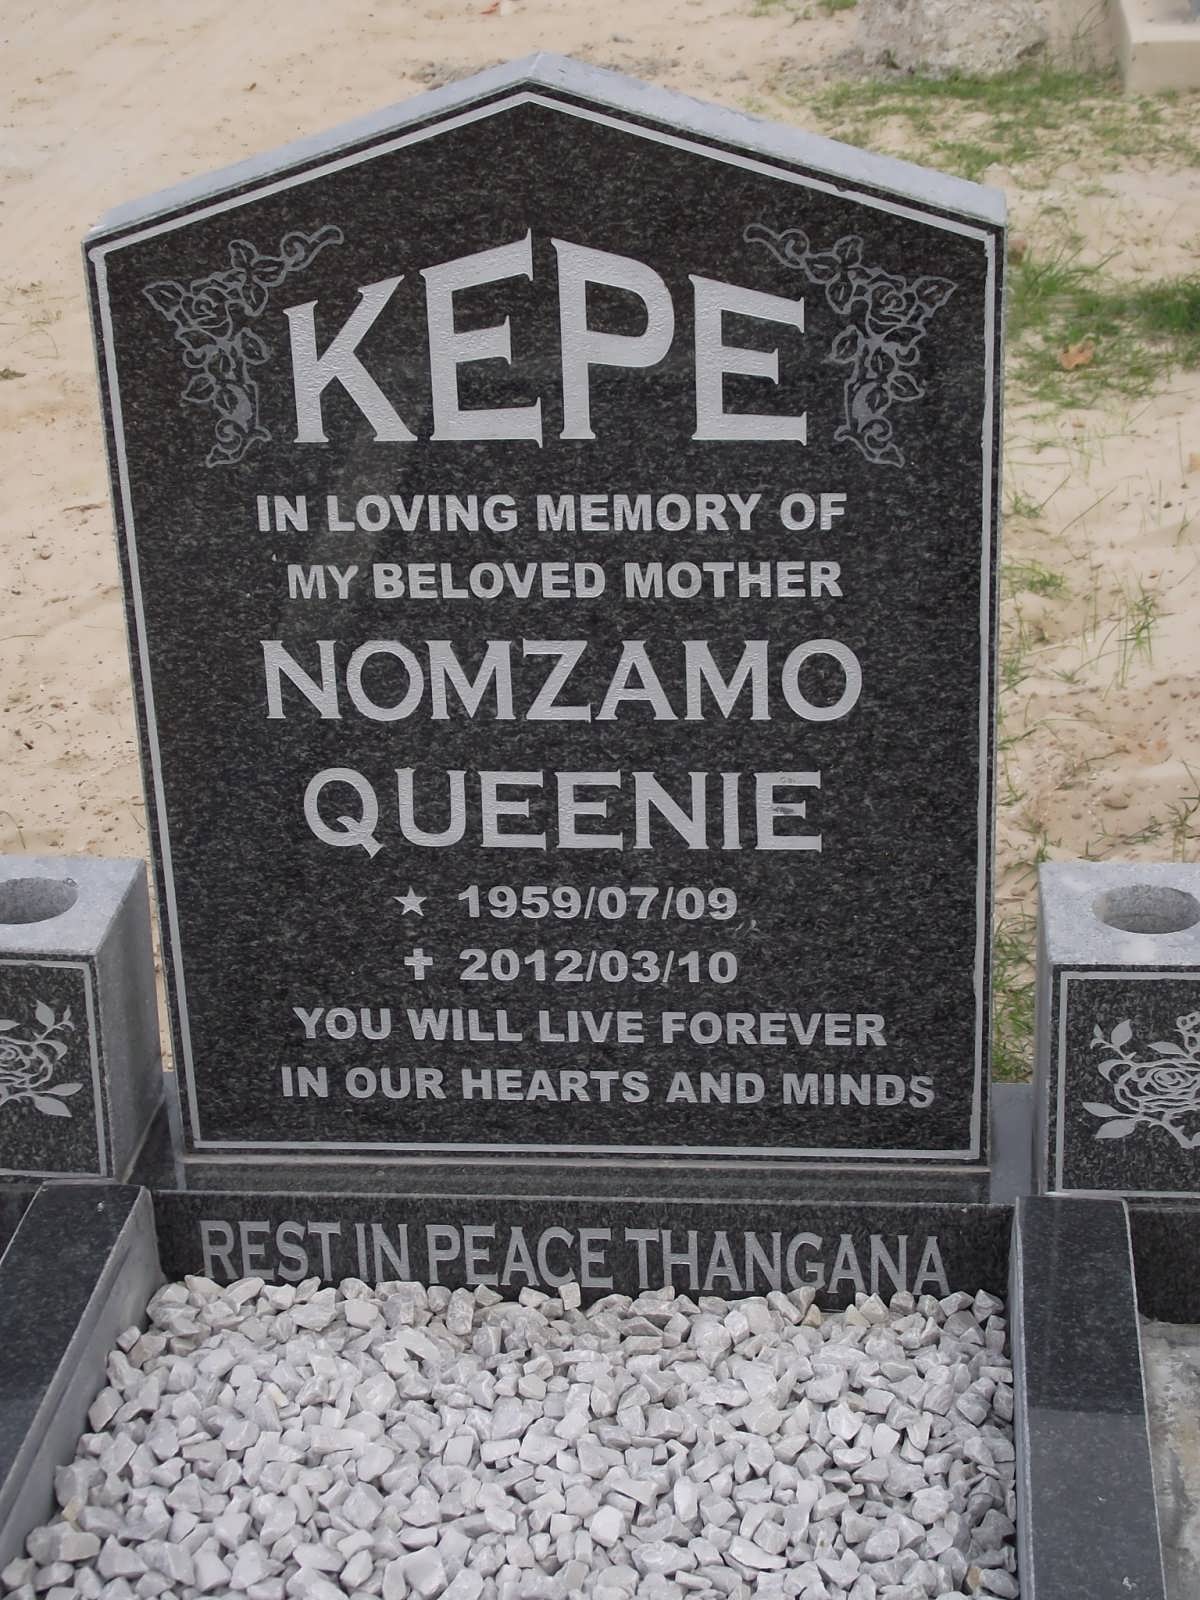 KEPE Nomzamo Queenie 1959-2012